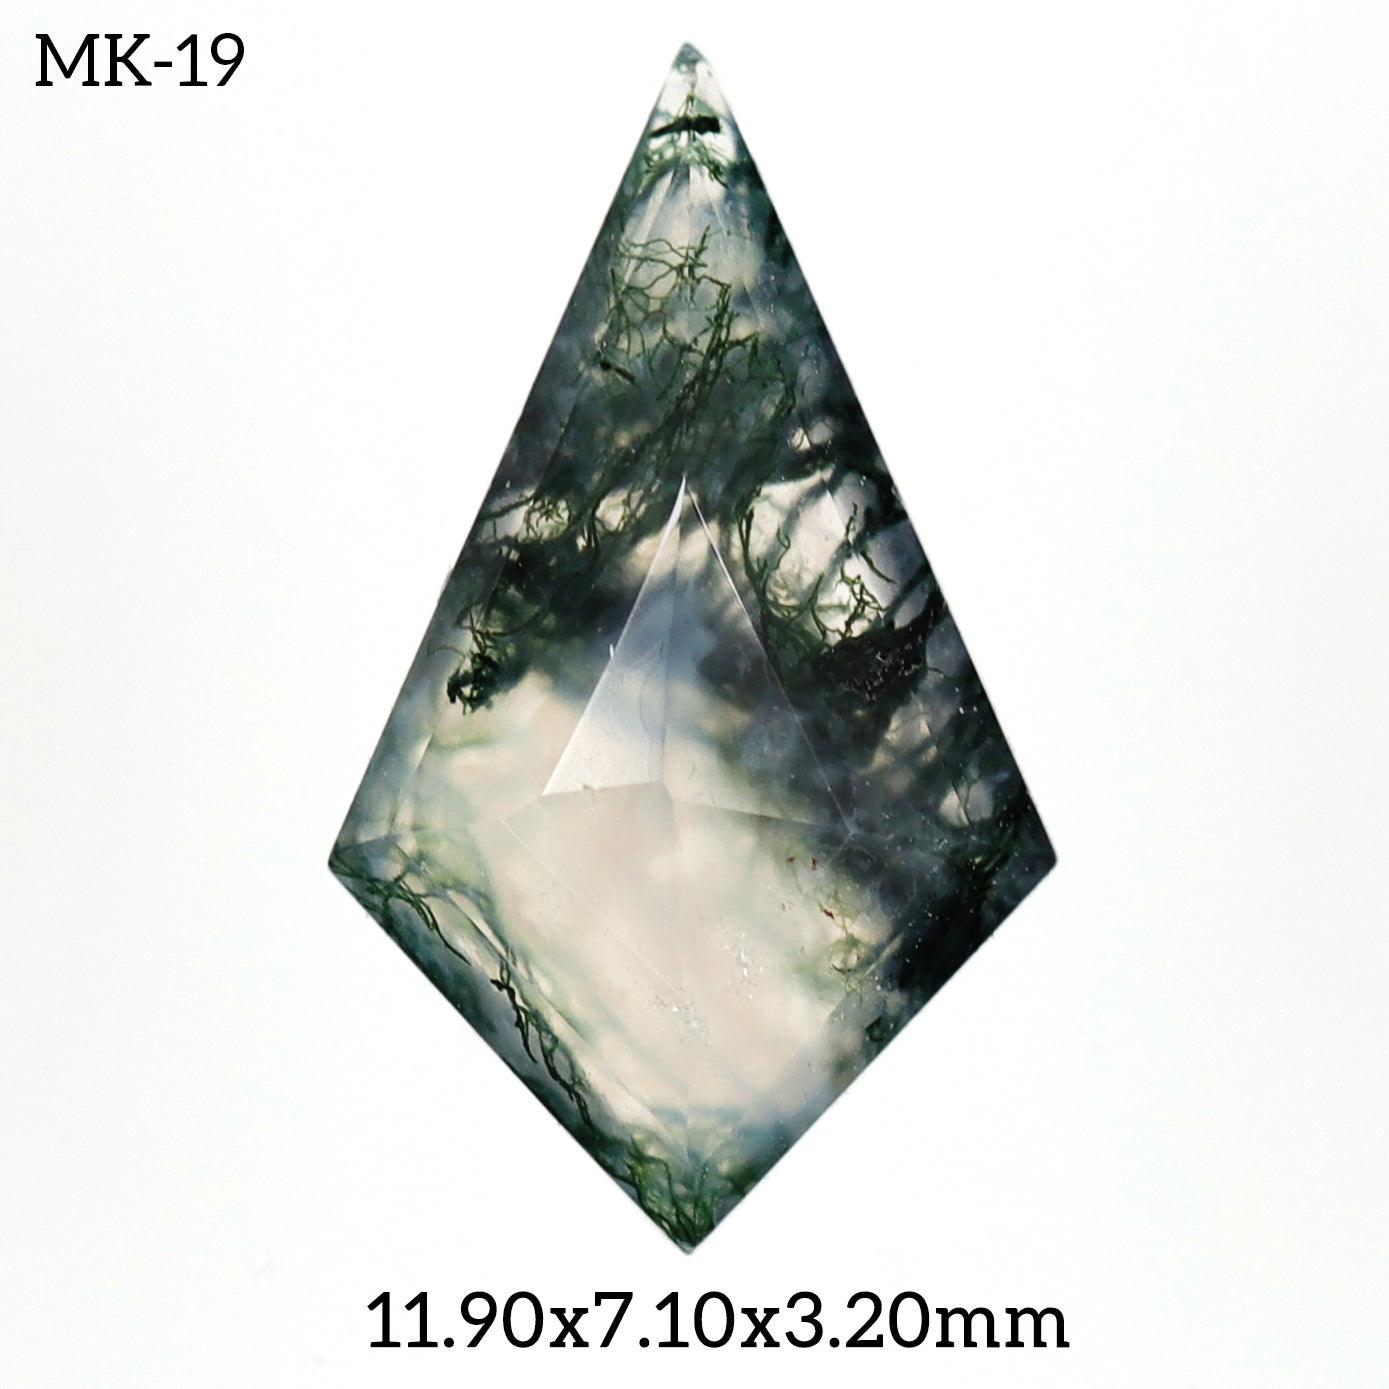 MK - 19 Moss Agate Kite Gemstone - Rubysta